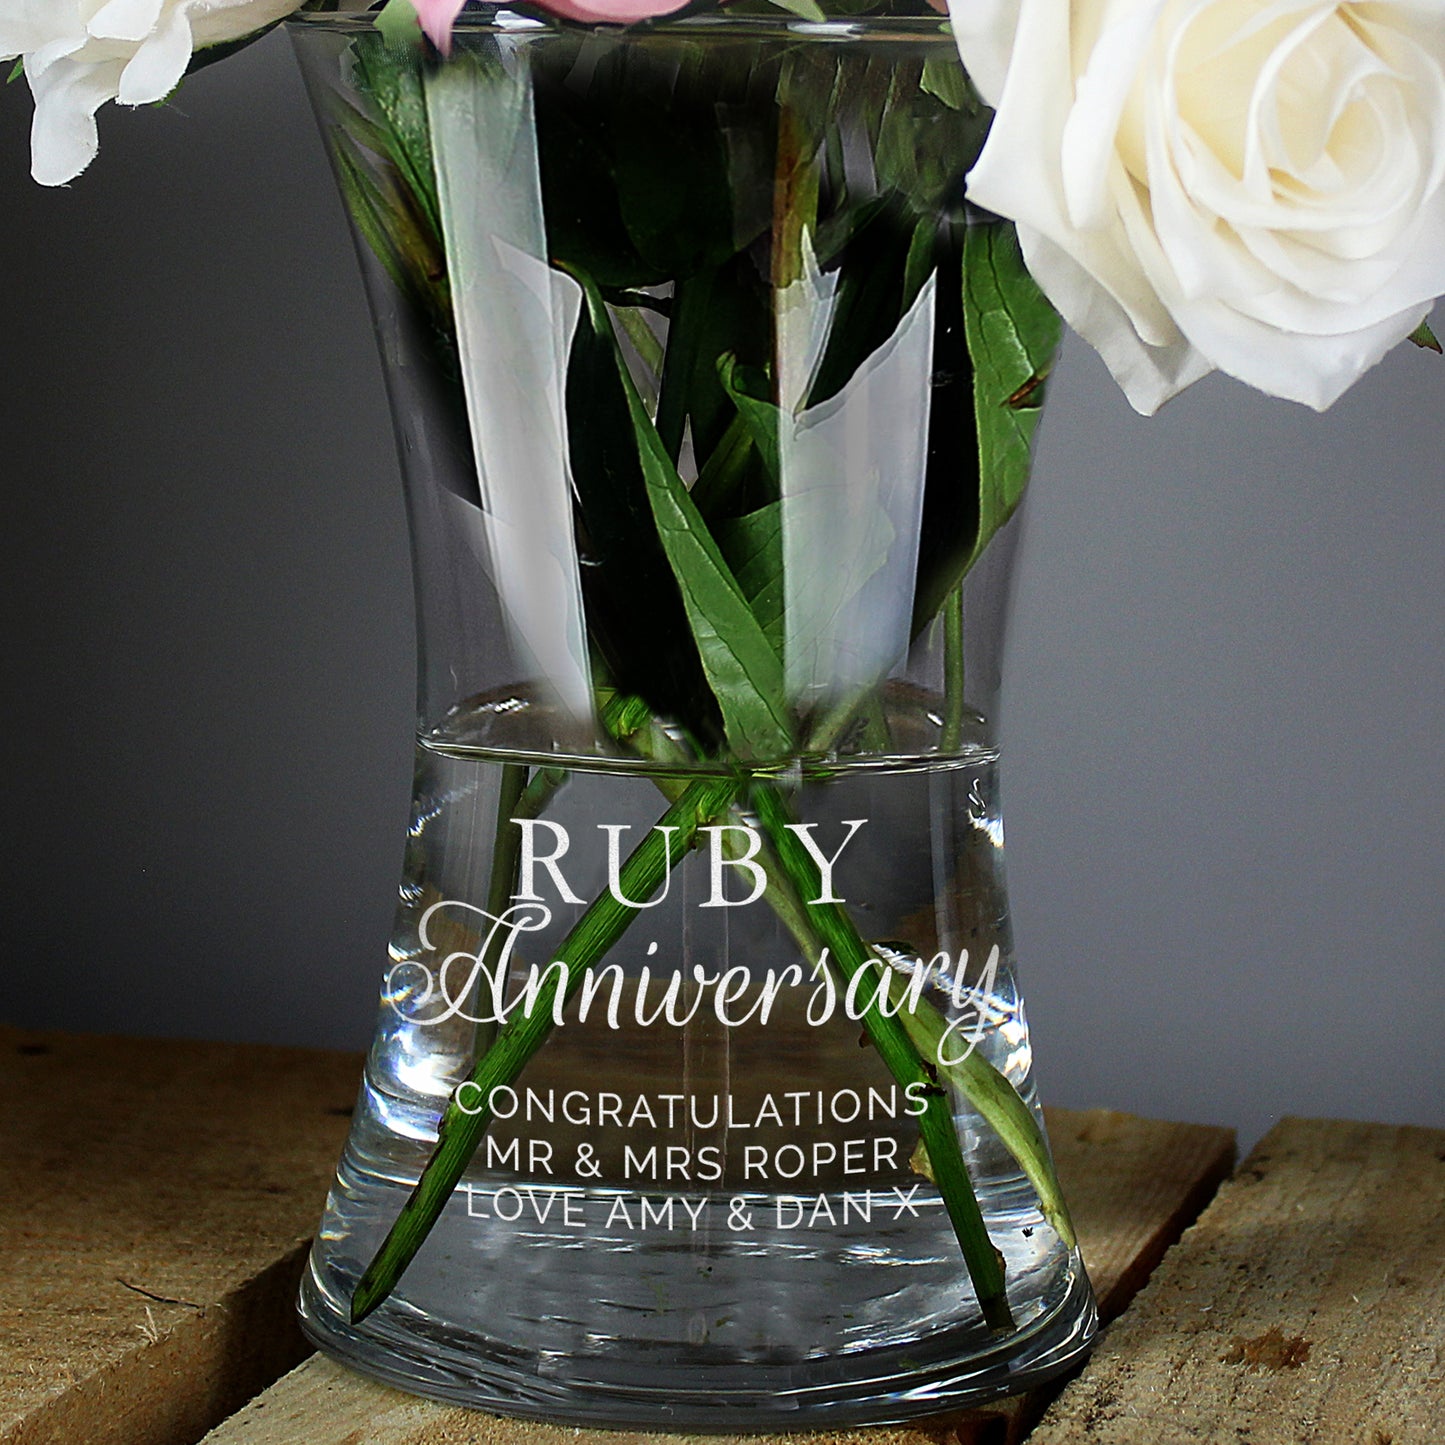 Personalised 'Ruby Anniversary' Glass Vase | 40th Anniversary Gift